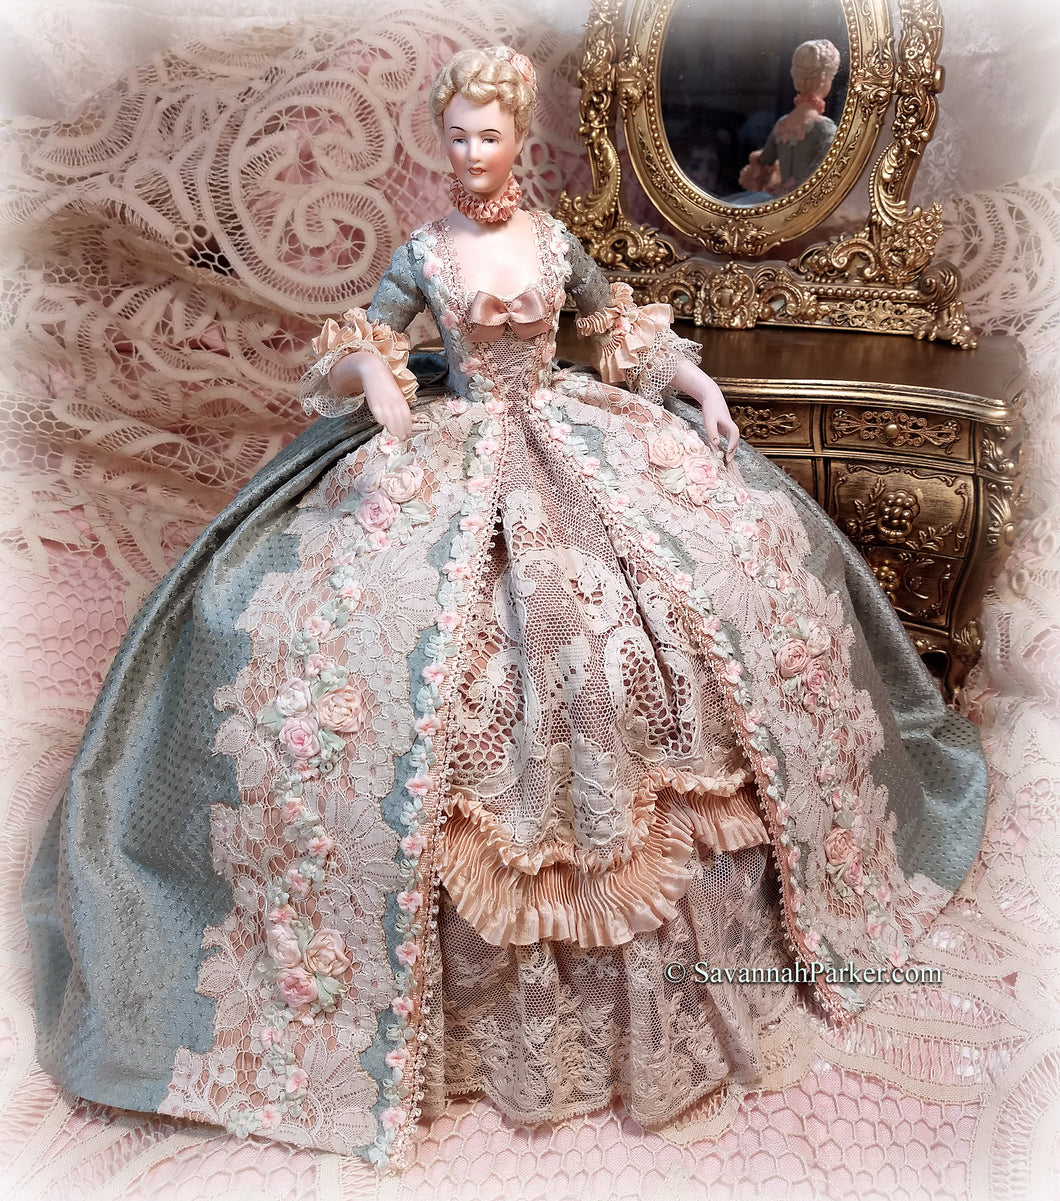 SOLD Magnificent Antique German Bisque BIG Half Doll, Exquisite Handsewn Lavish Aqua Silk and Antique Lace Costume, Silk Ribbonwork Rose Garlands